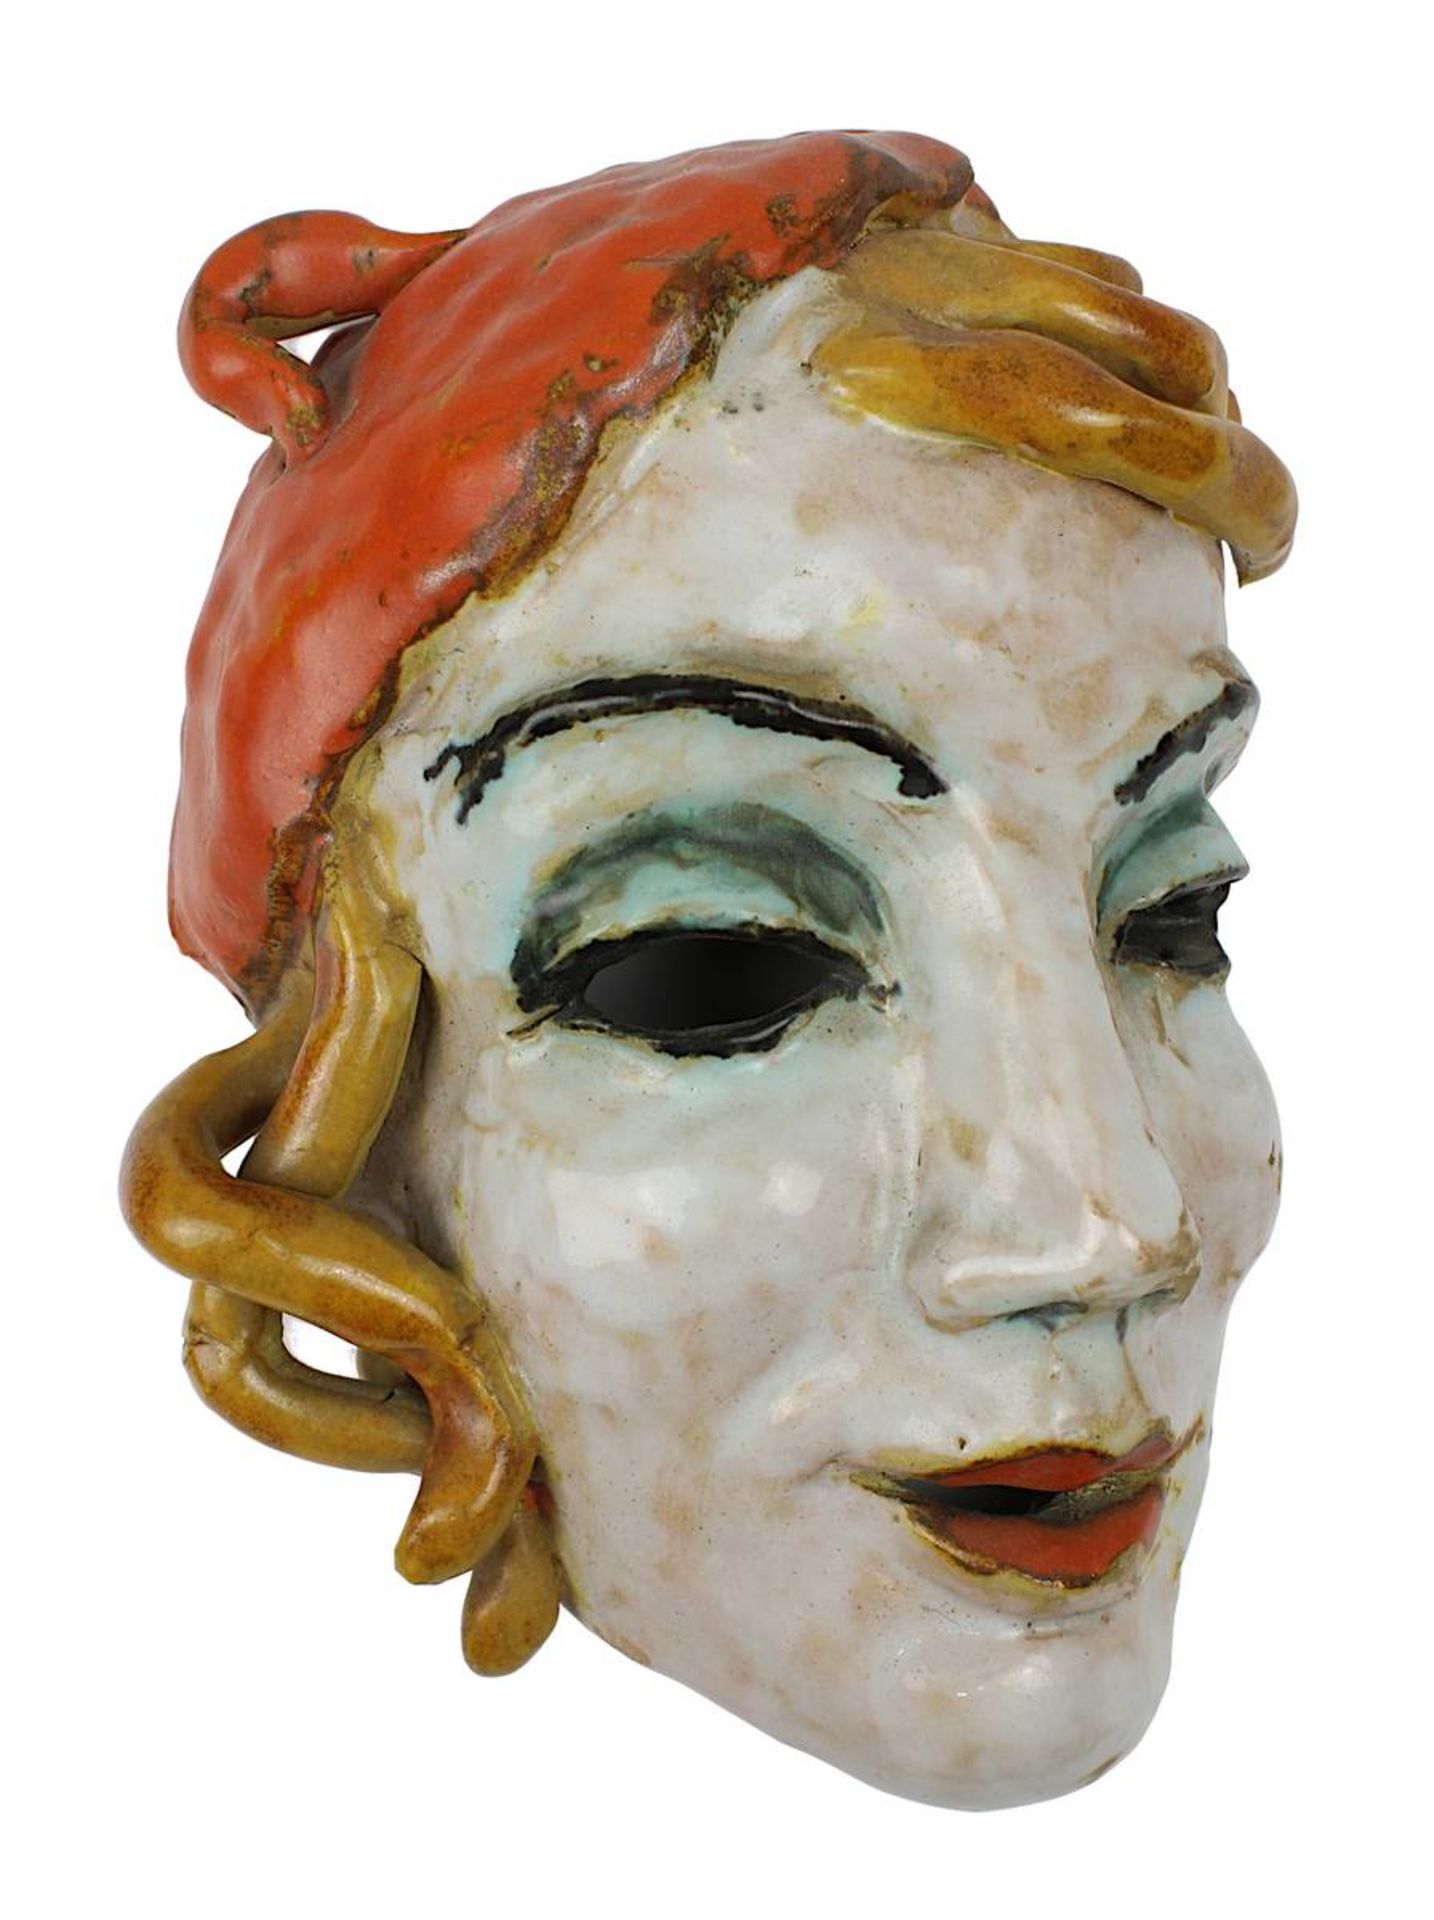 Wieselthier, Vally (Wien 1895 - 1945 New York) (attr.) Wandmaske um 1928, Keramik, heller